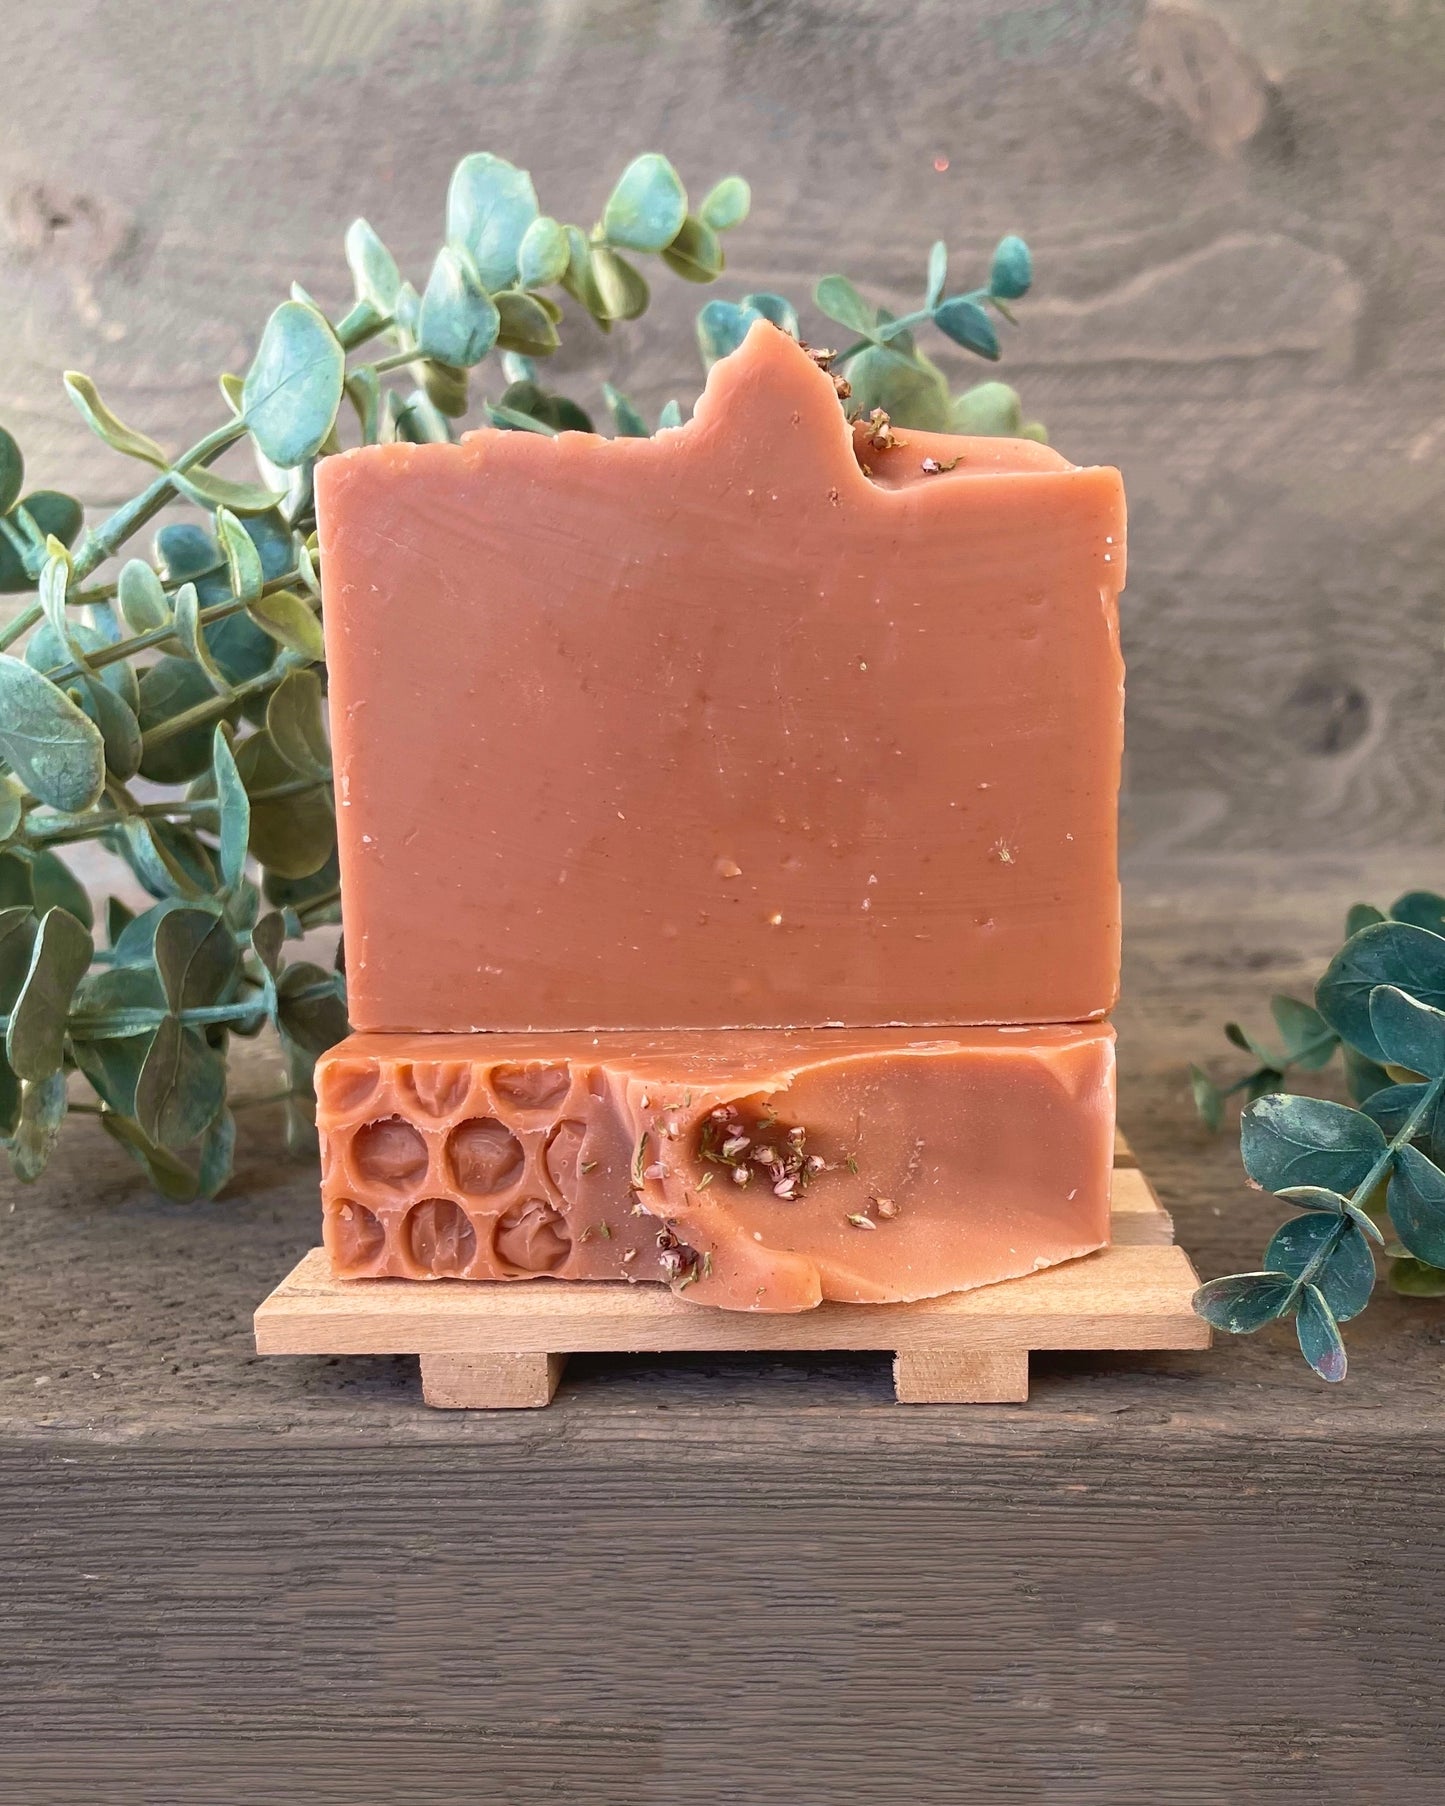 Wildflower Honey Soap